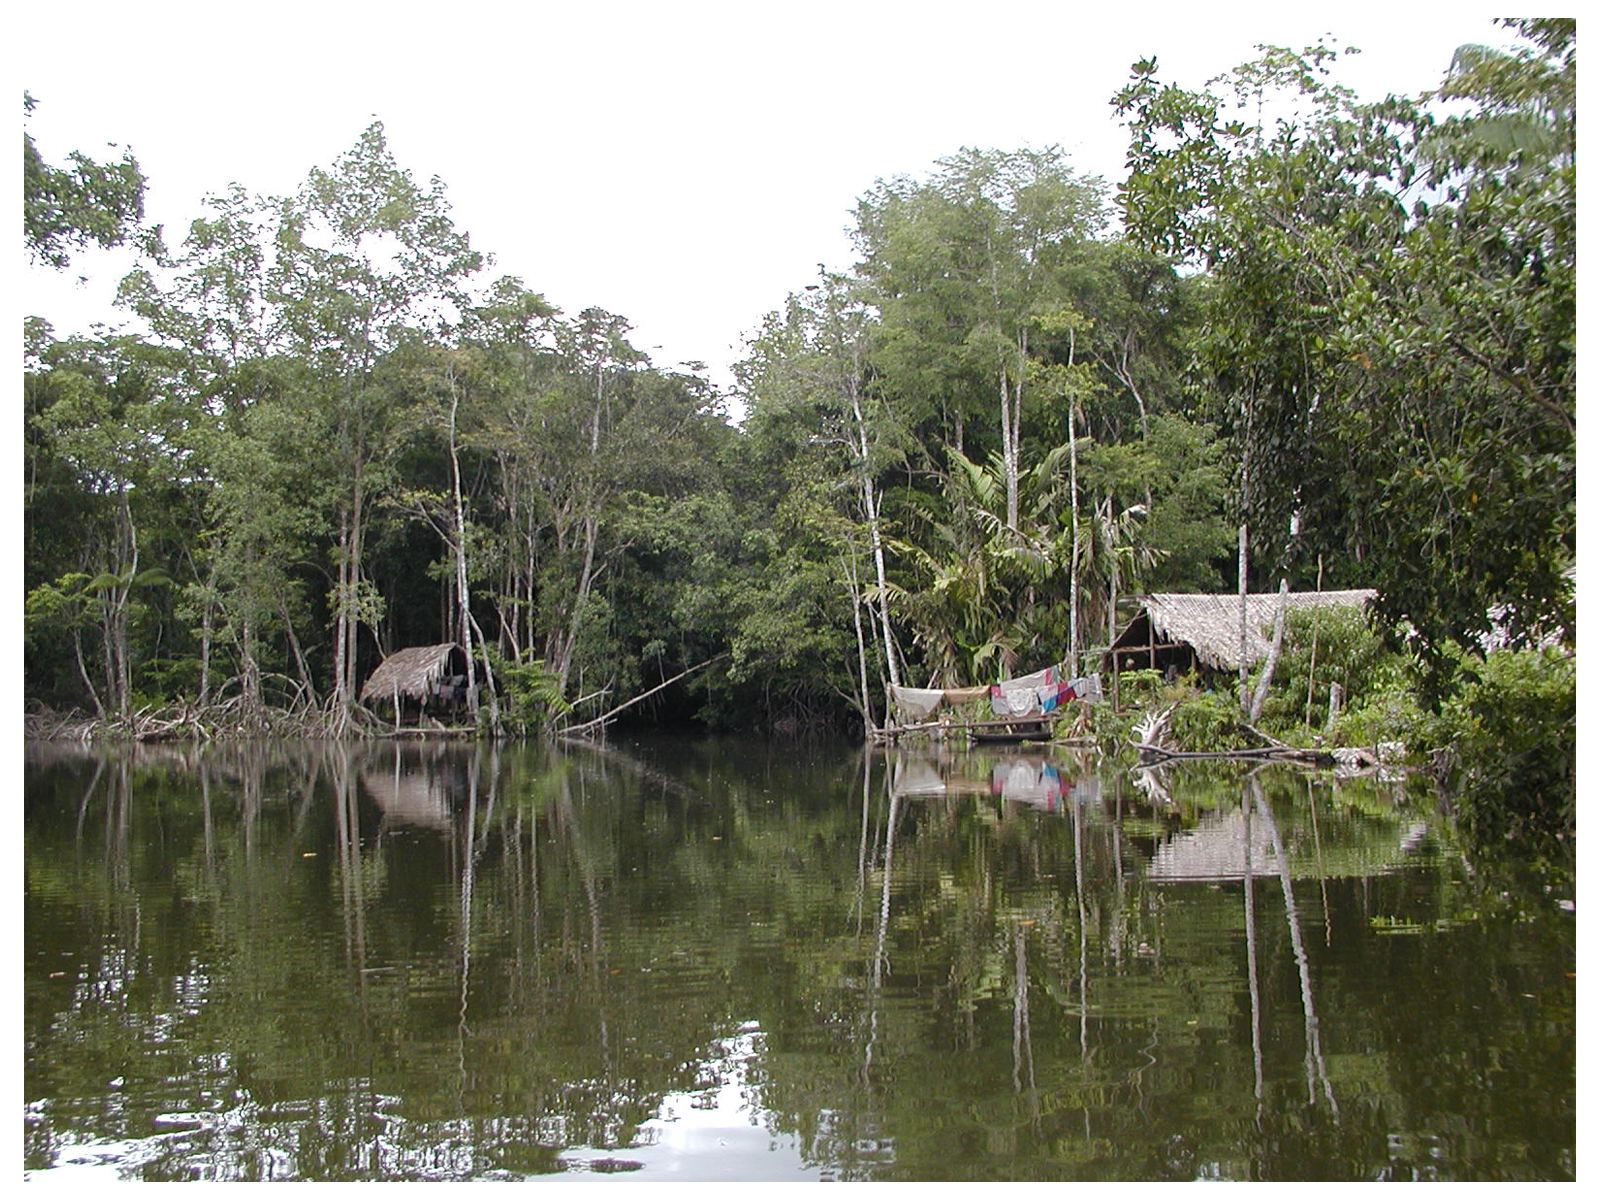 Warau Indian Huts, Orinocco Delta, Venezuela